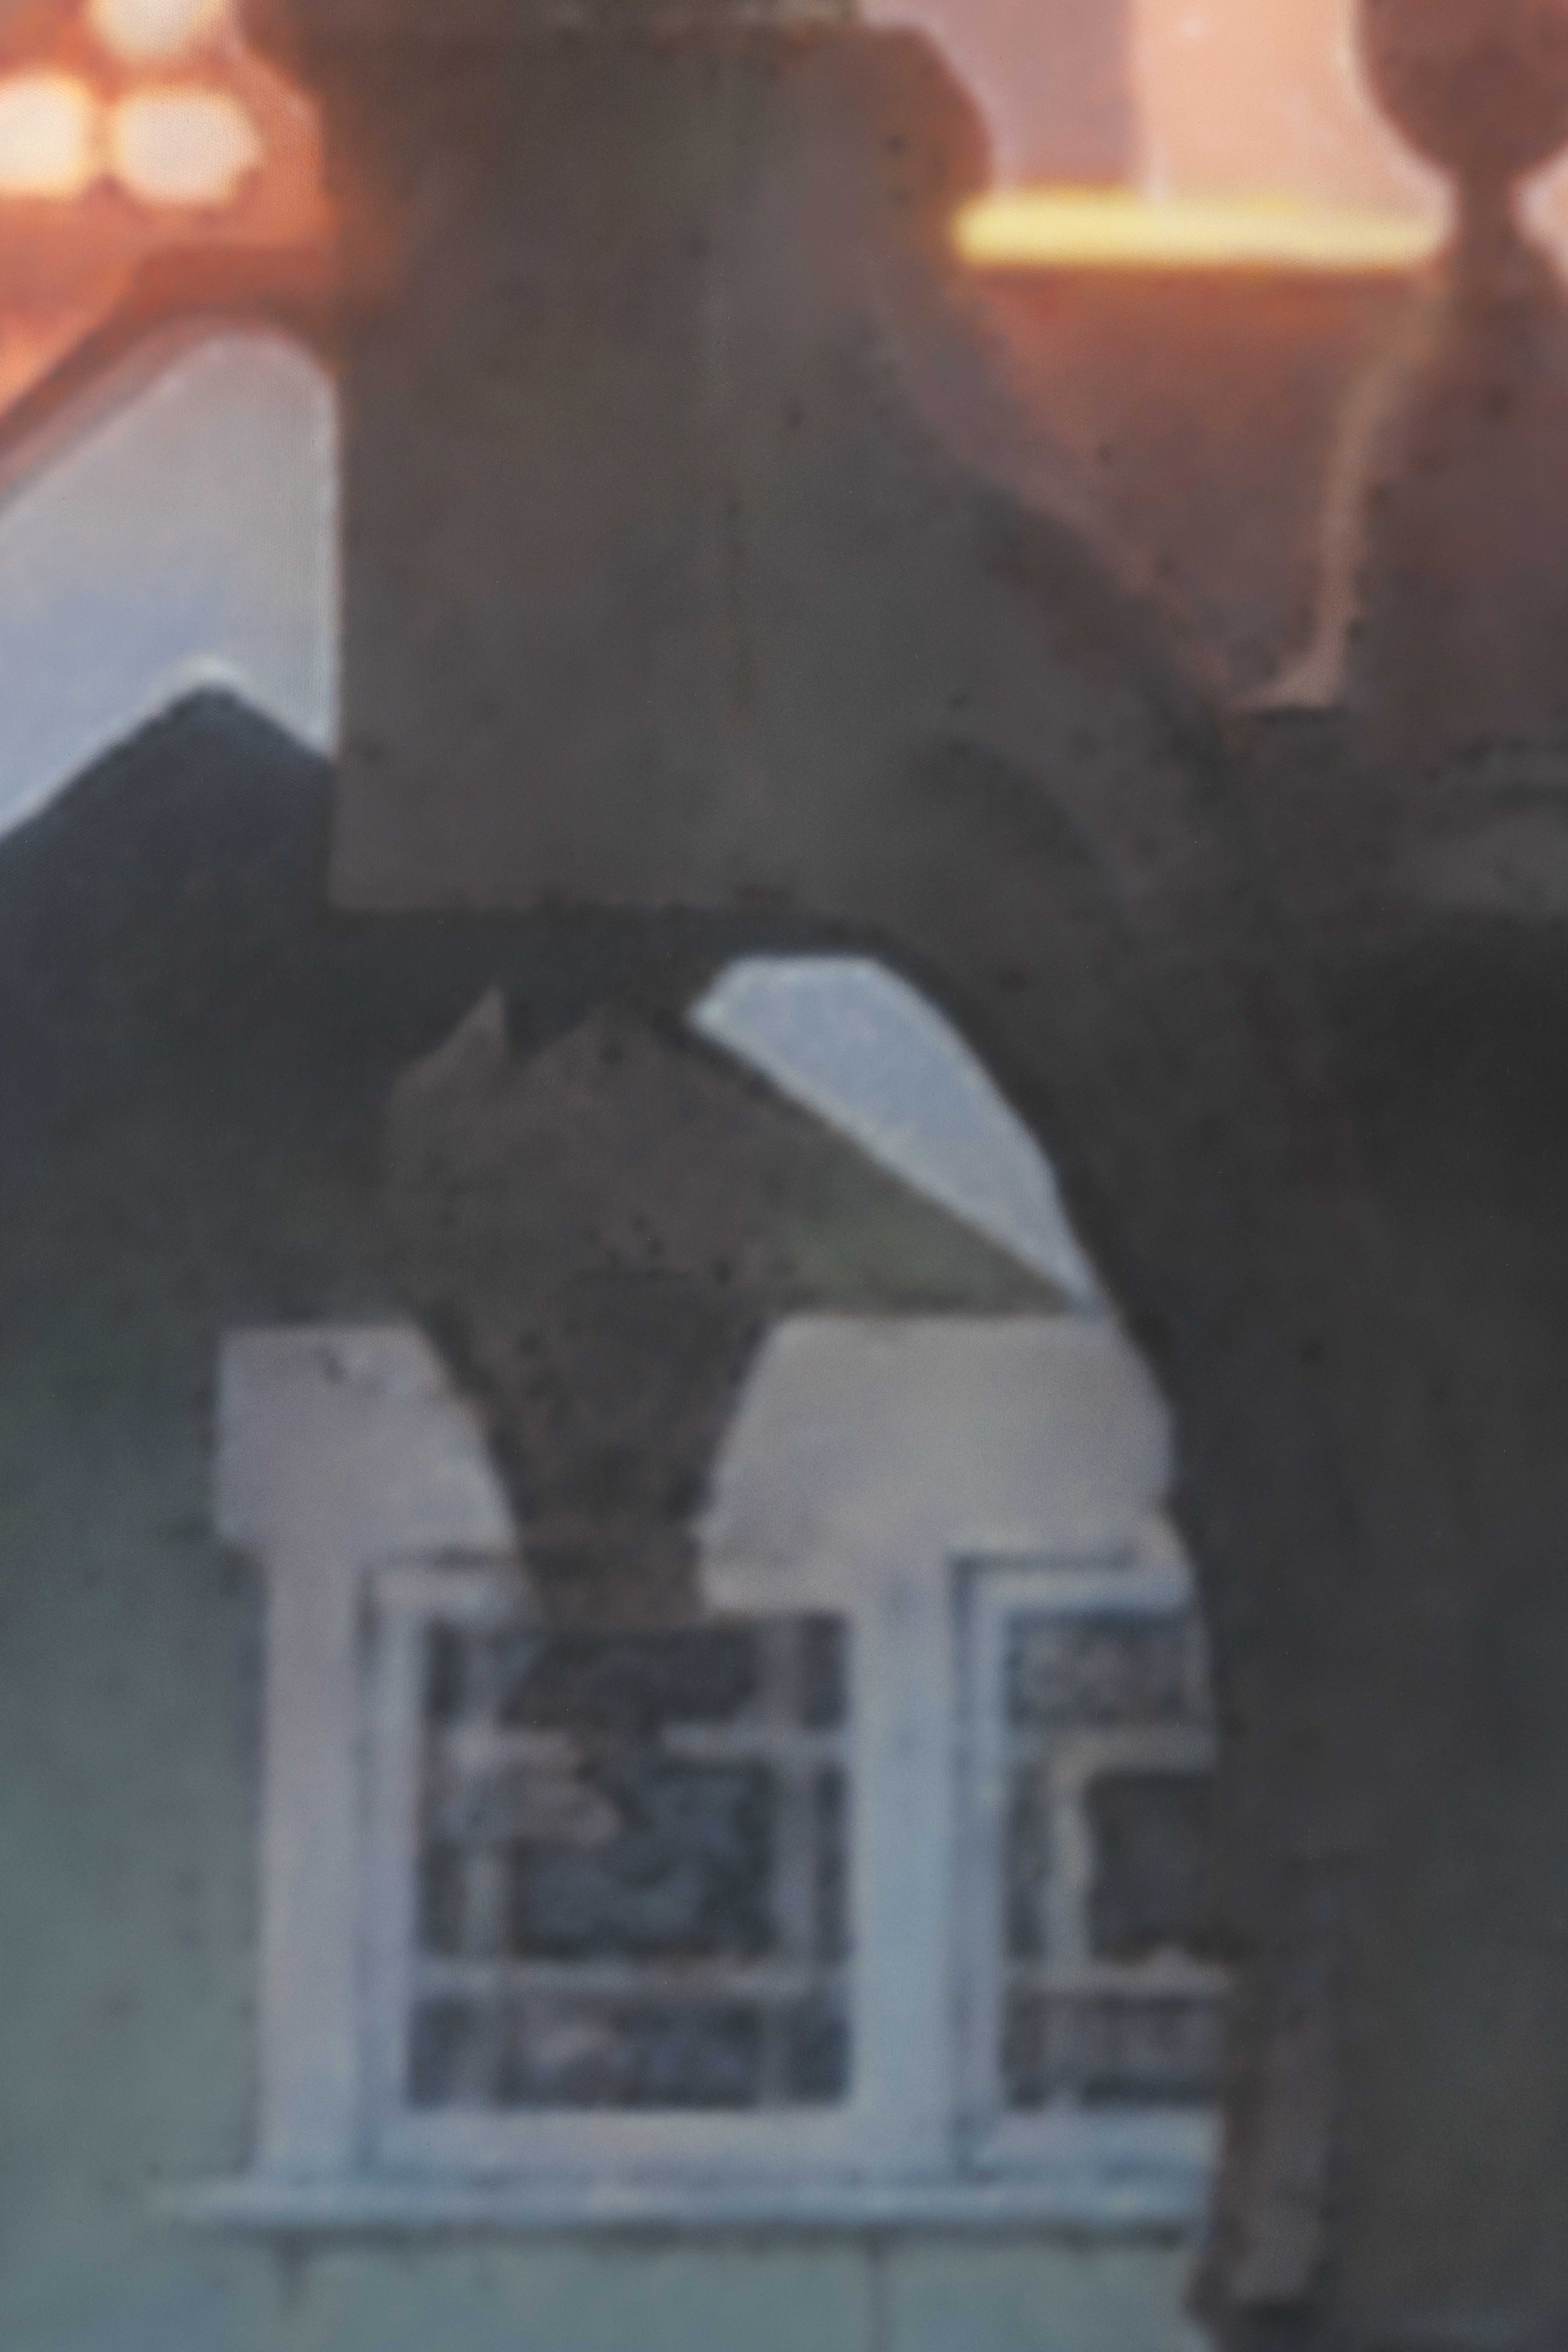   Event Horizon , 2021. Detail 